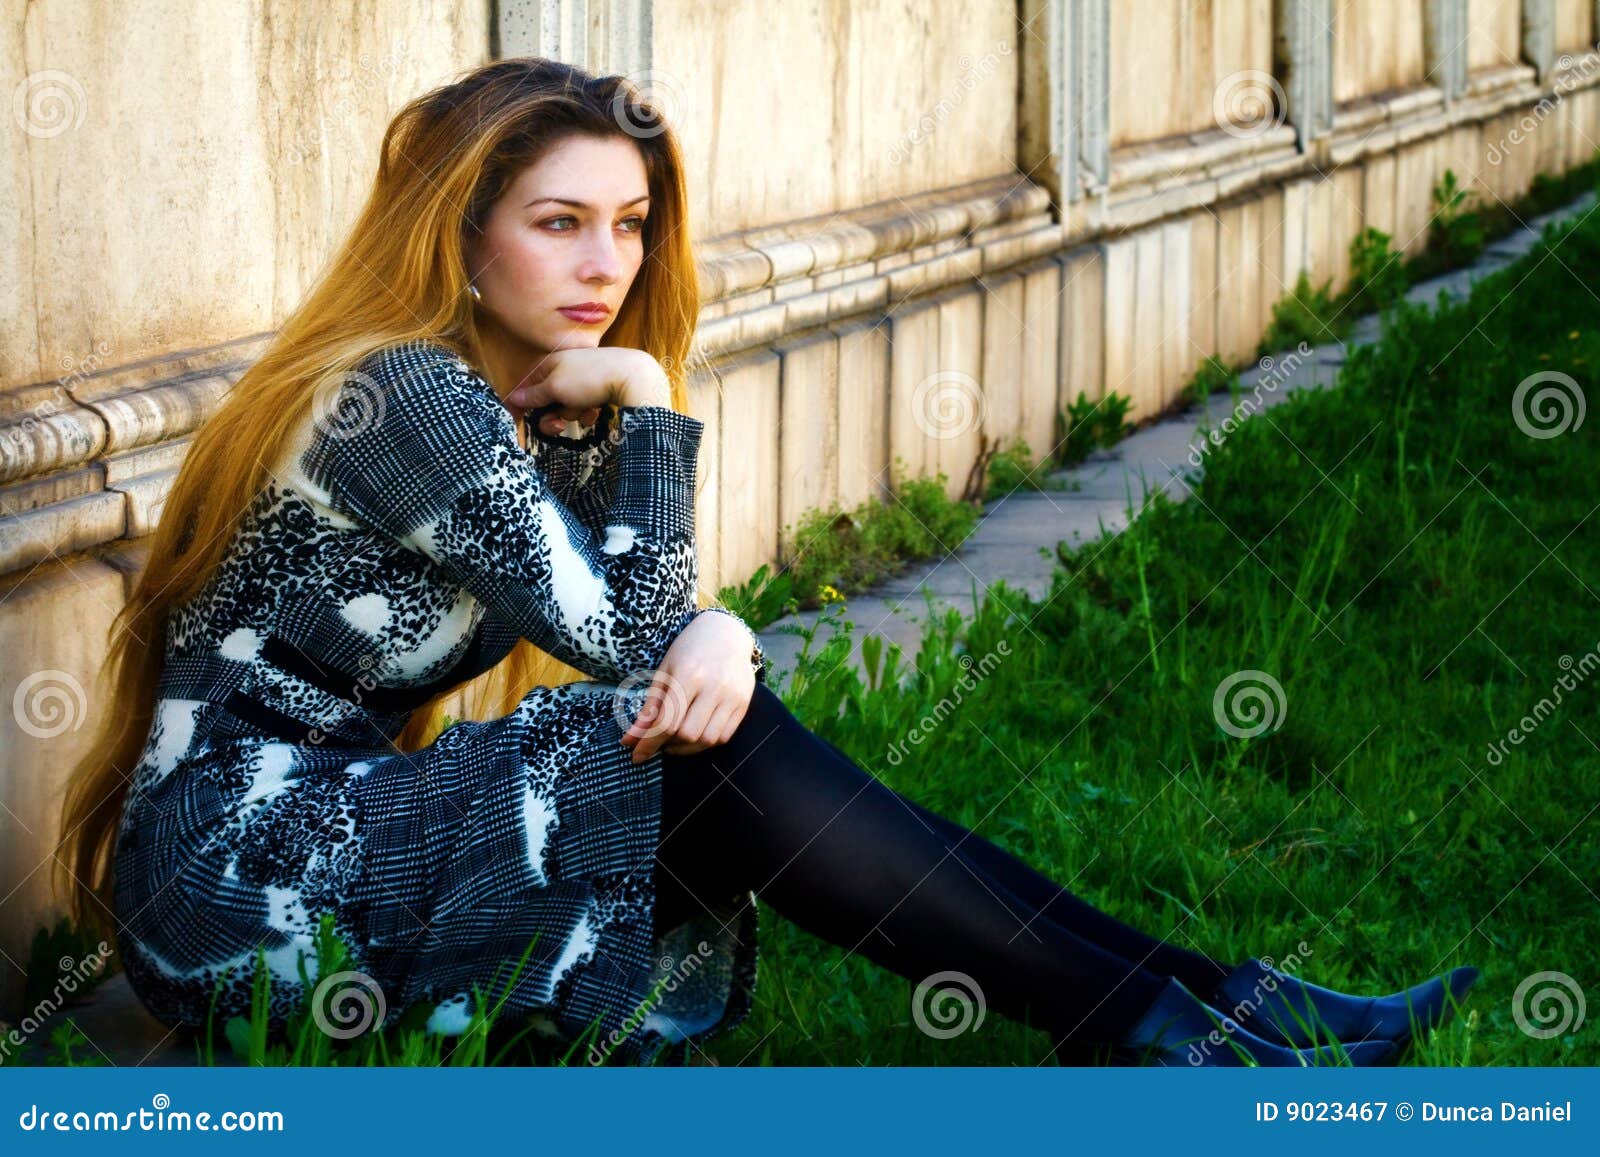 solitude - sad pensive woman sitting alone